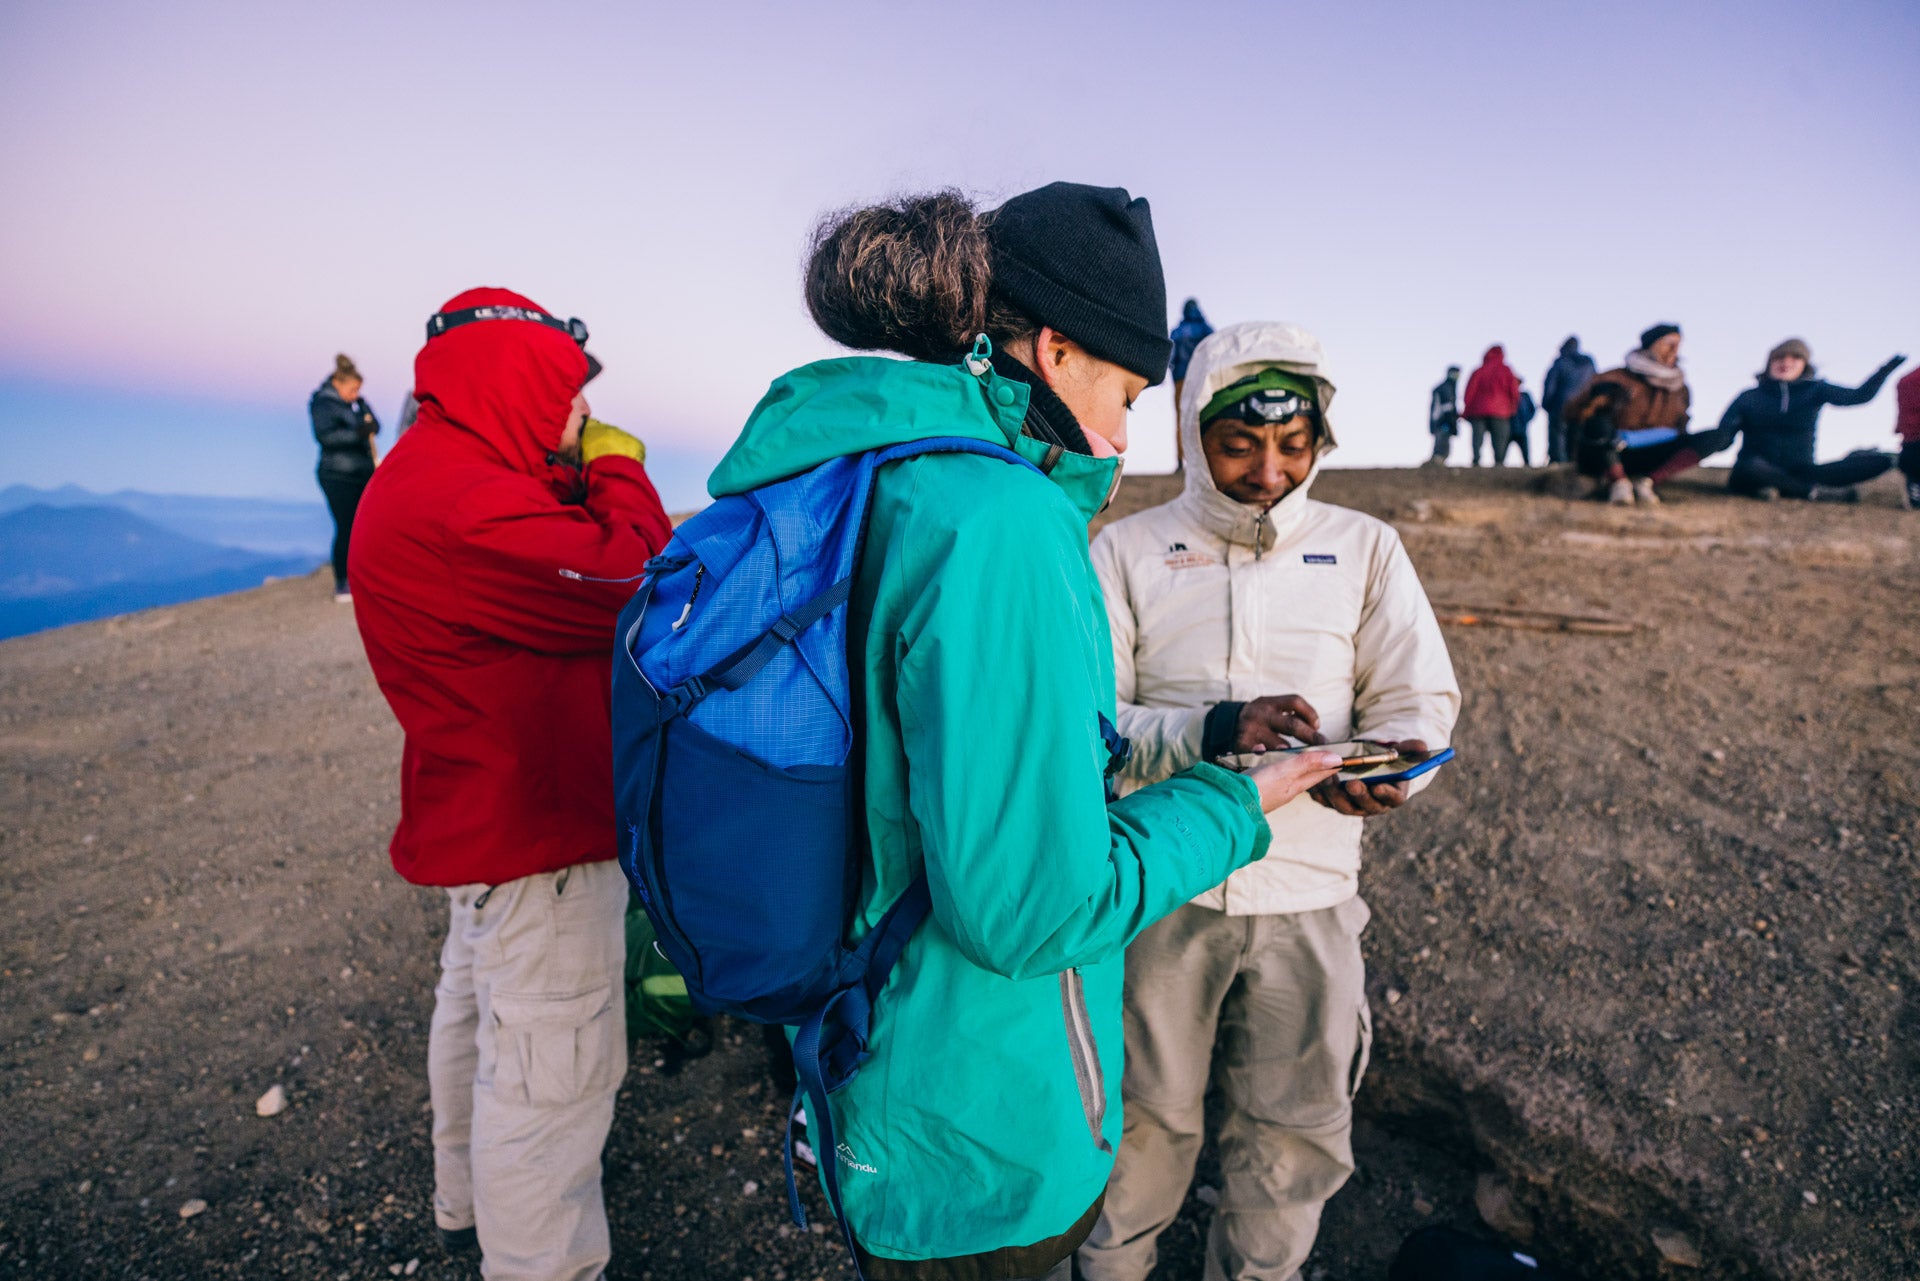 Viaventure guide, Rafael Chicojay leading a tour on Volcán de Fuego 